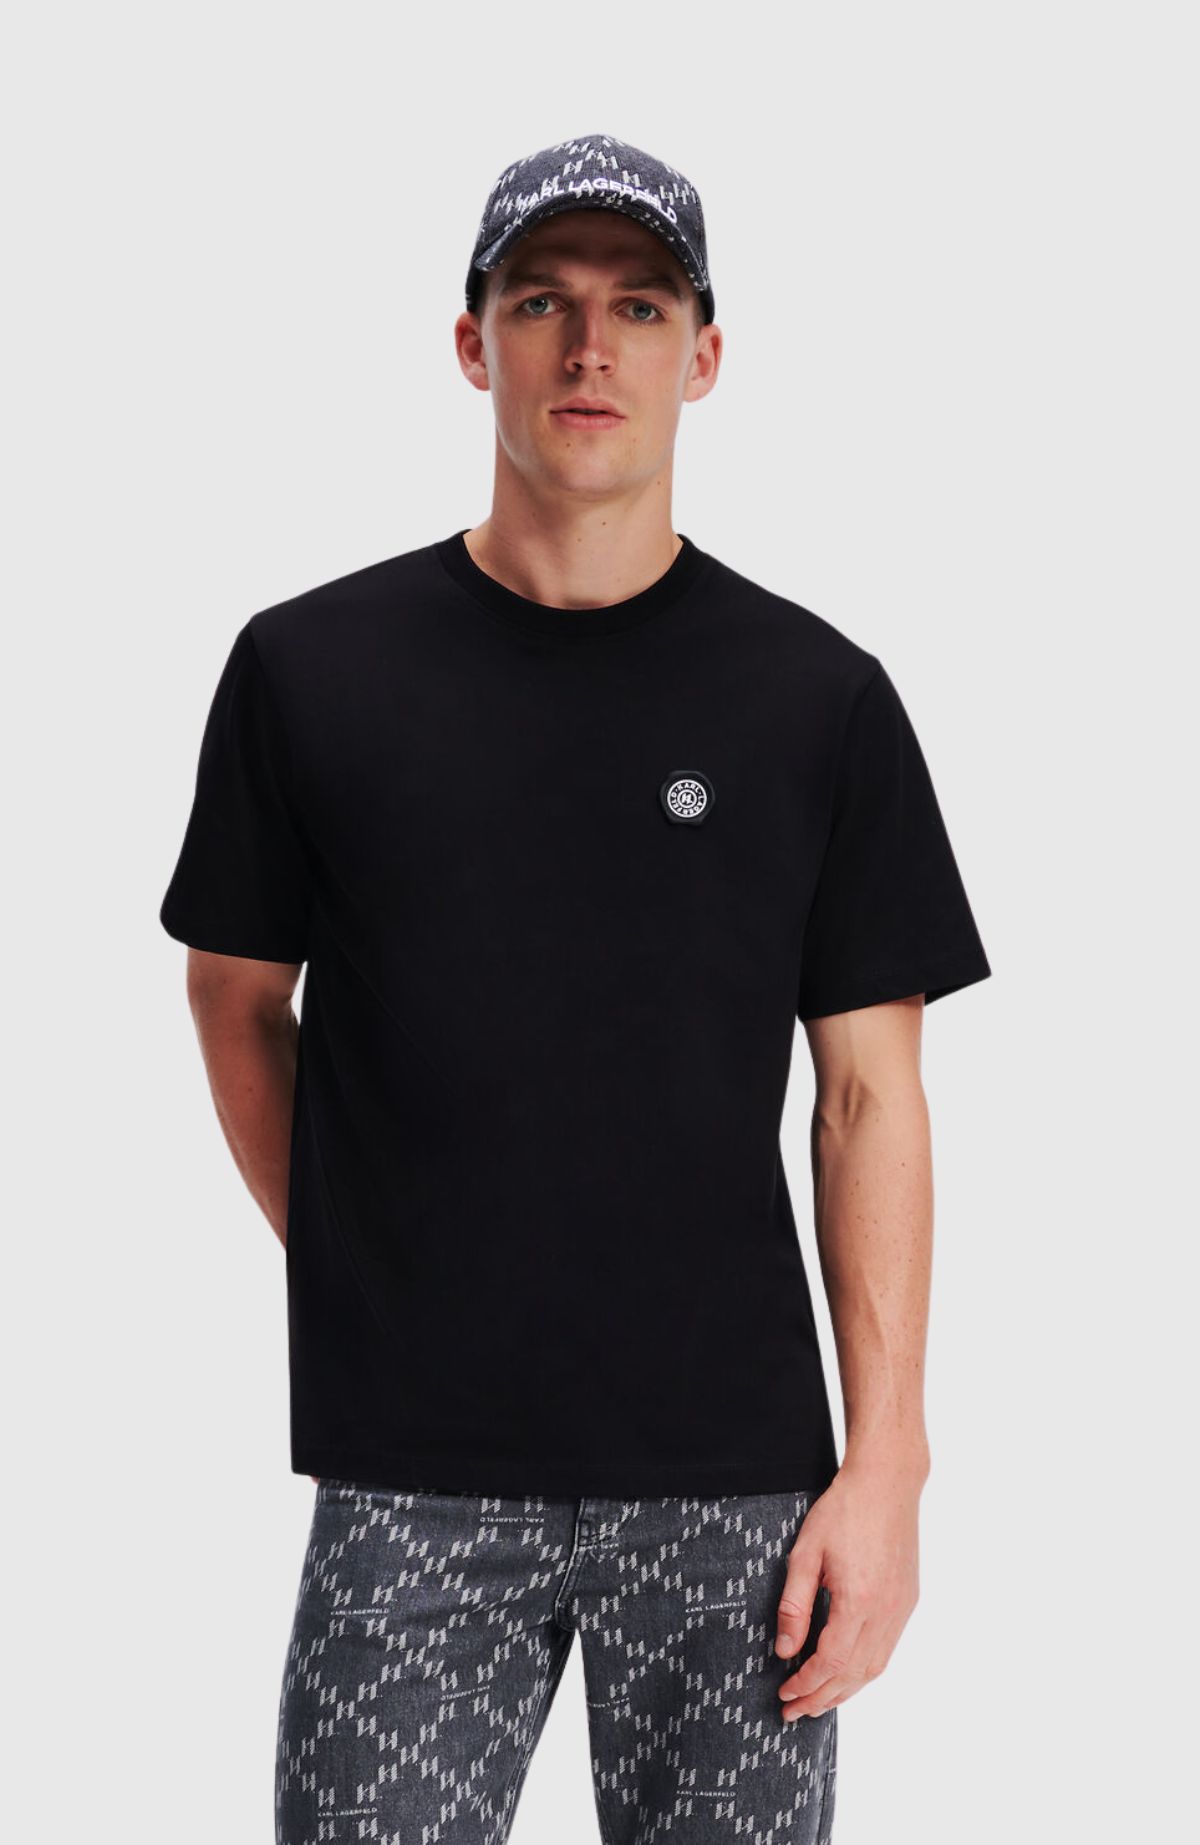 Wax Seal T-Shirt